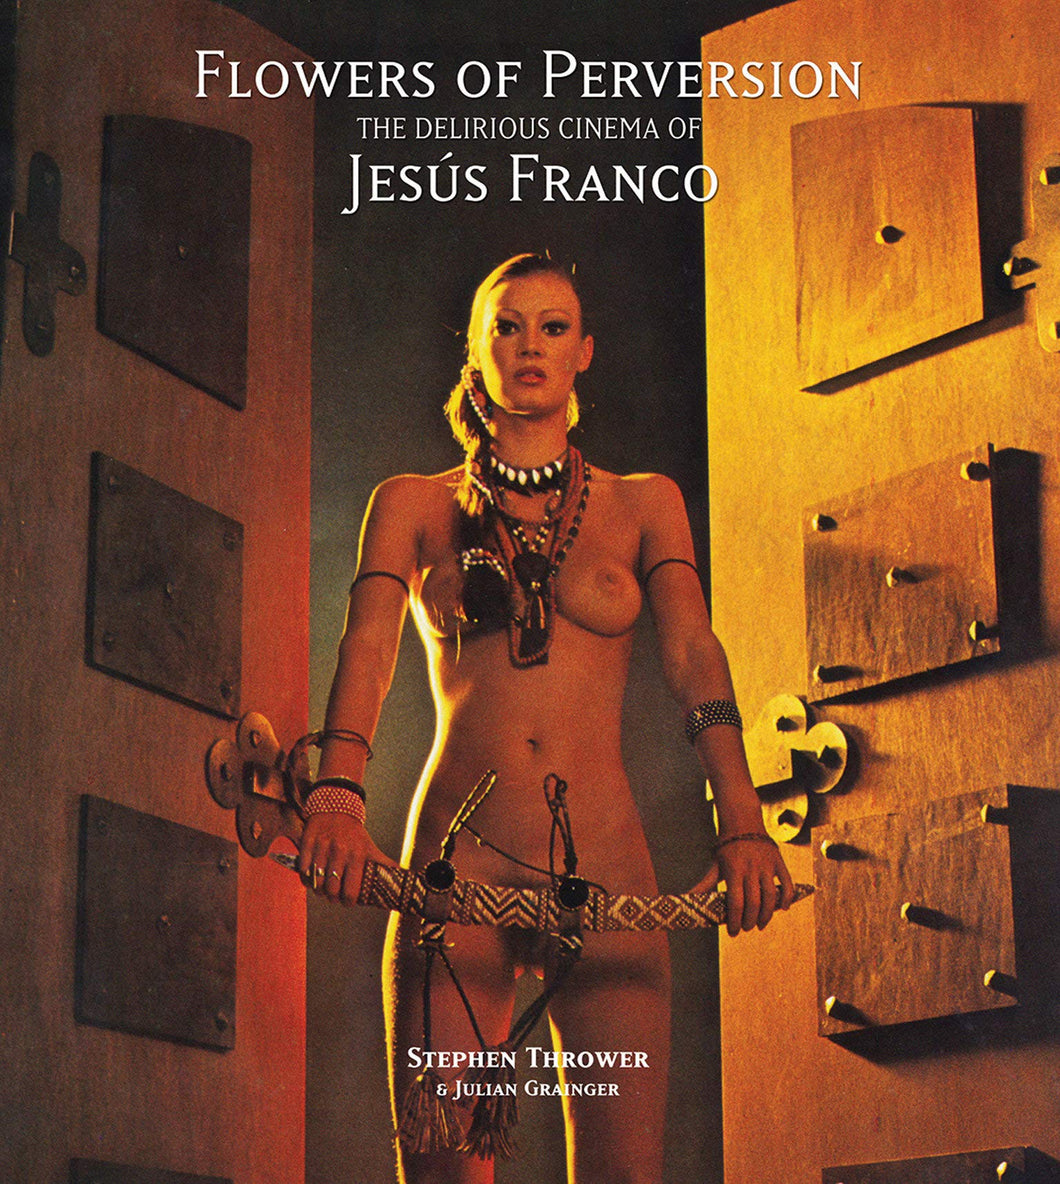 Flowers of Perversion, Volume 2 : The Delirious Cinema of Jesus Franco ร้านหนังสือและสิ่งของ เป็นร้านหนังสือภาษาอังกฤษหายาก และร้านกาแฟ หรือ บุ๊คคาเฟ่ ตั้งอยู่สุขุมวิท กรุงเทพ